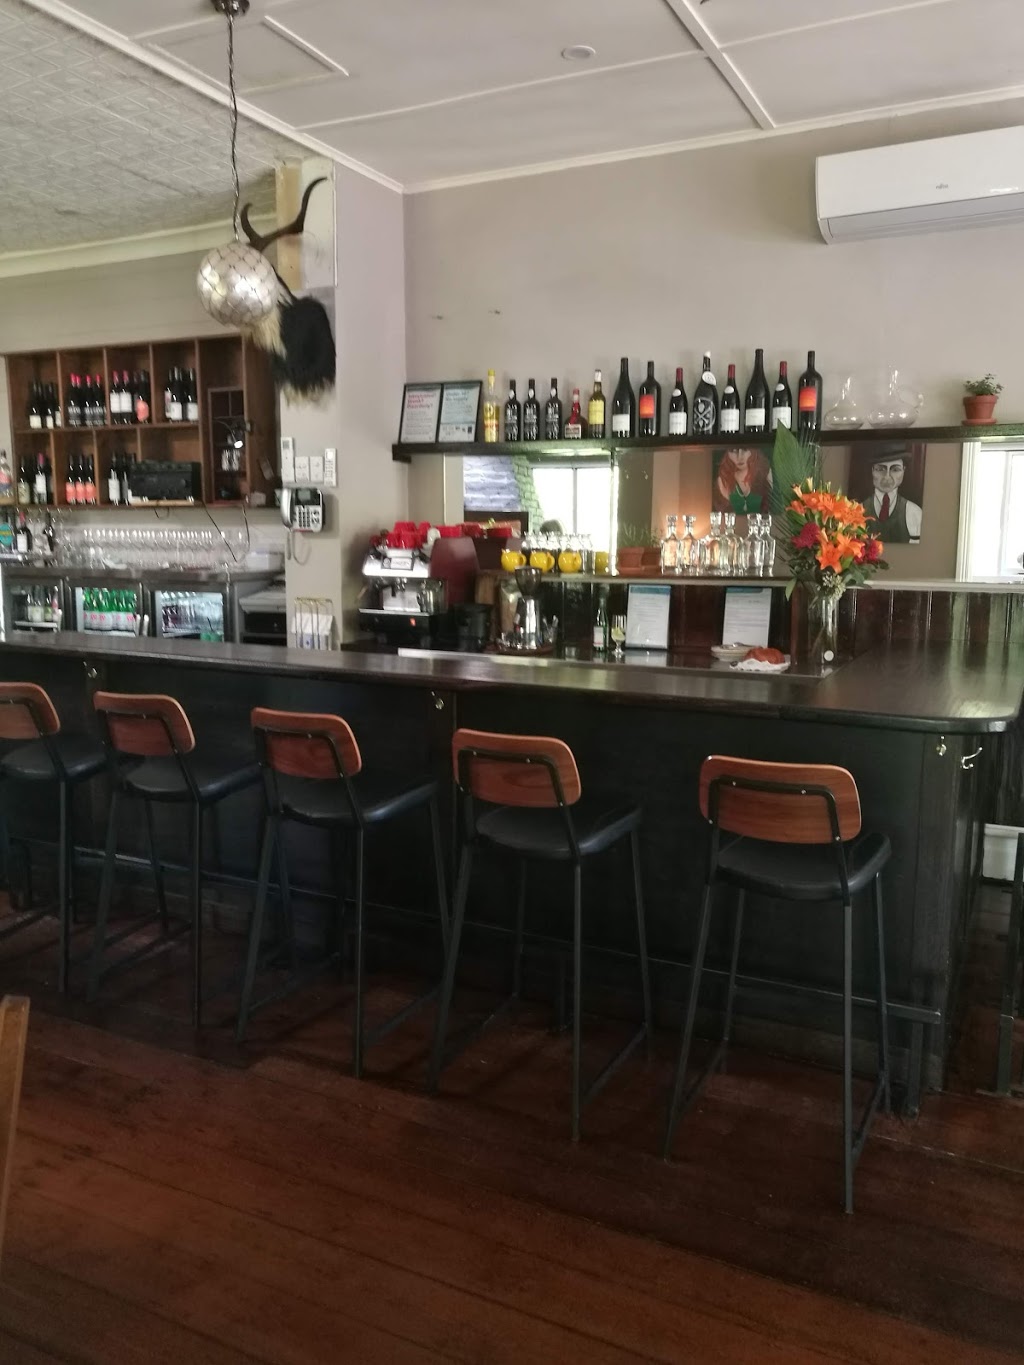 The Surly Goat | restaurant | 3 Tenth St, Hepburn Springs VIC 3461, Australia | 0353484628 OR +61 3 5348 4628